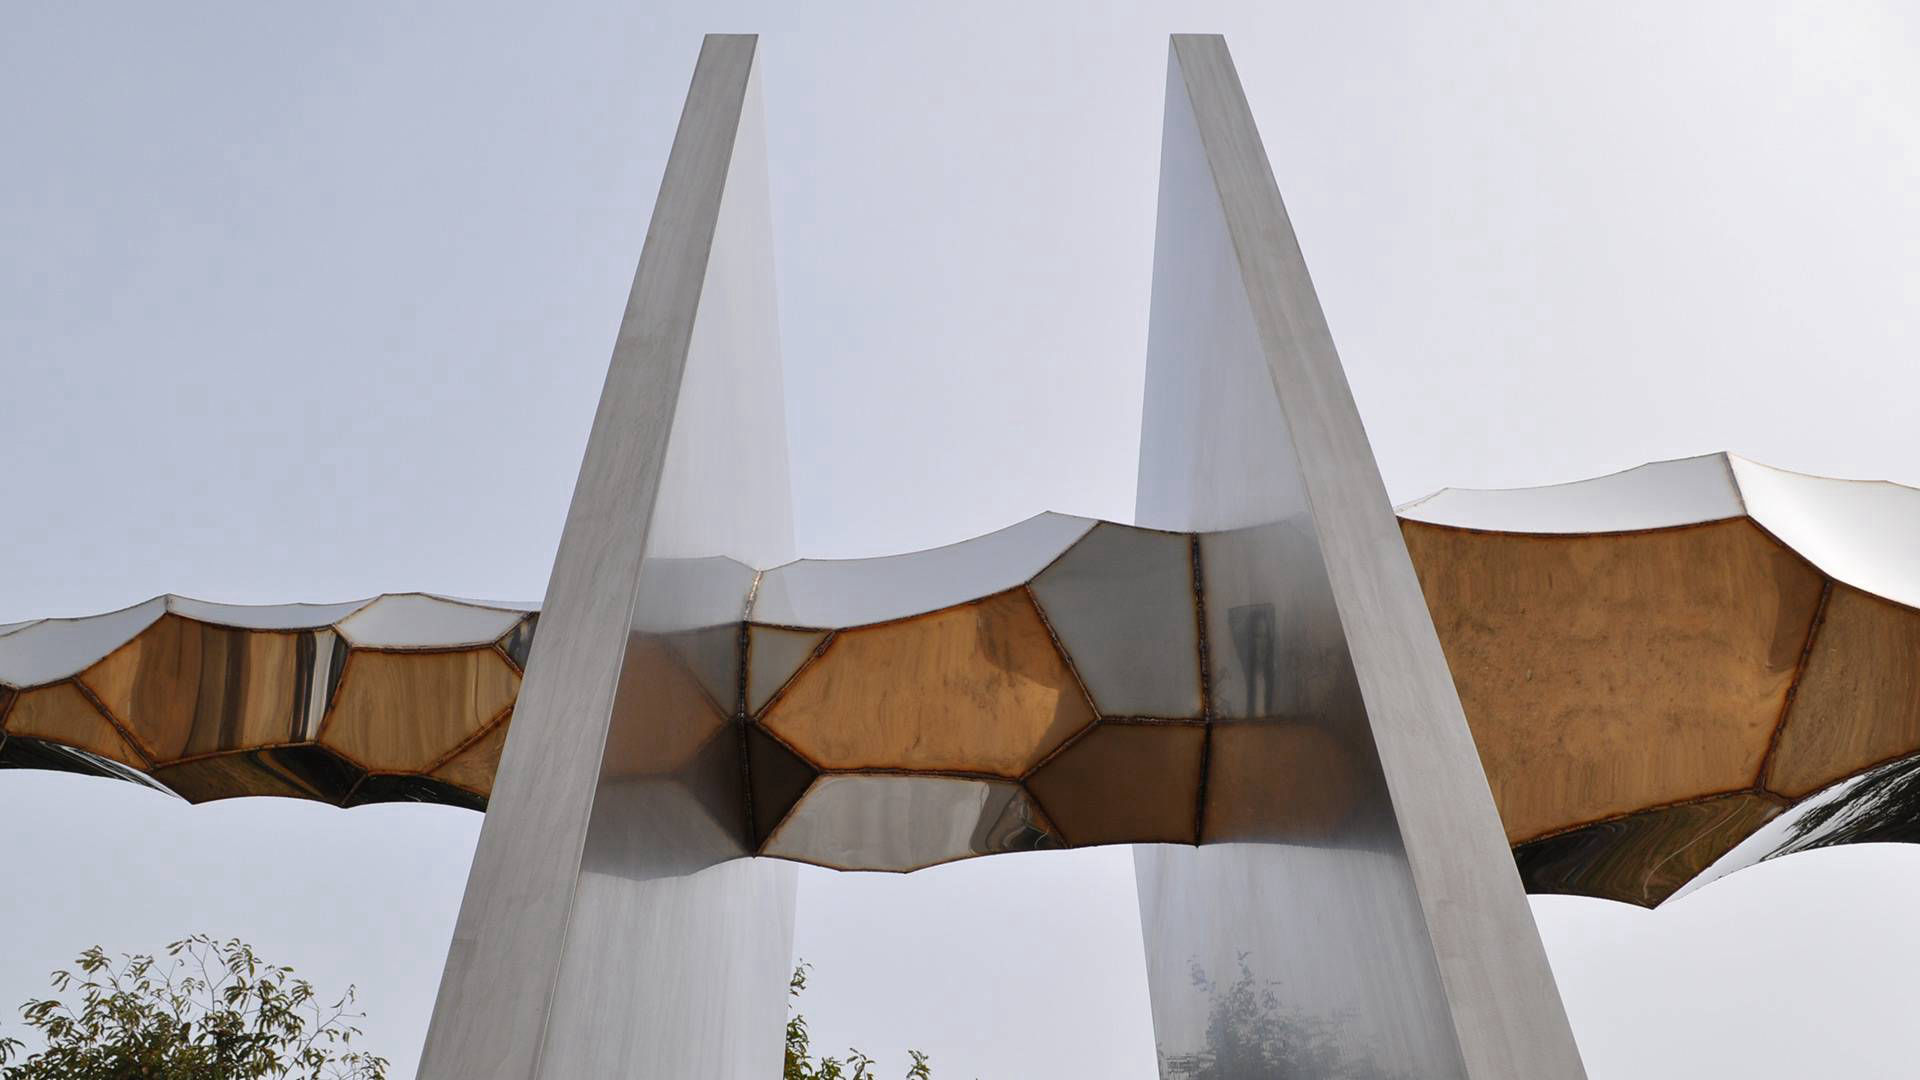 911 Memorial - stainless steel WTC public art sculpture by Heath Satow Rosemead CA